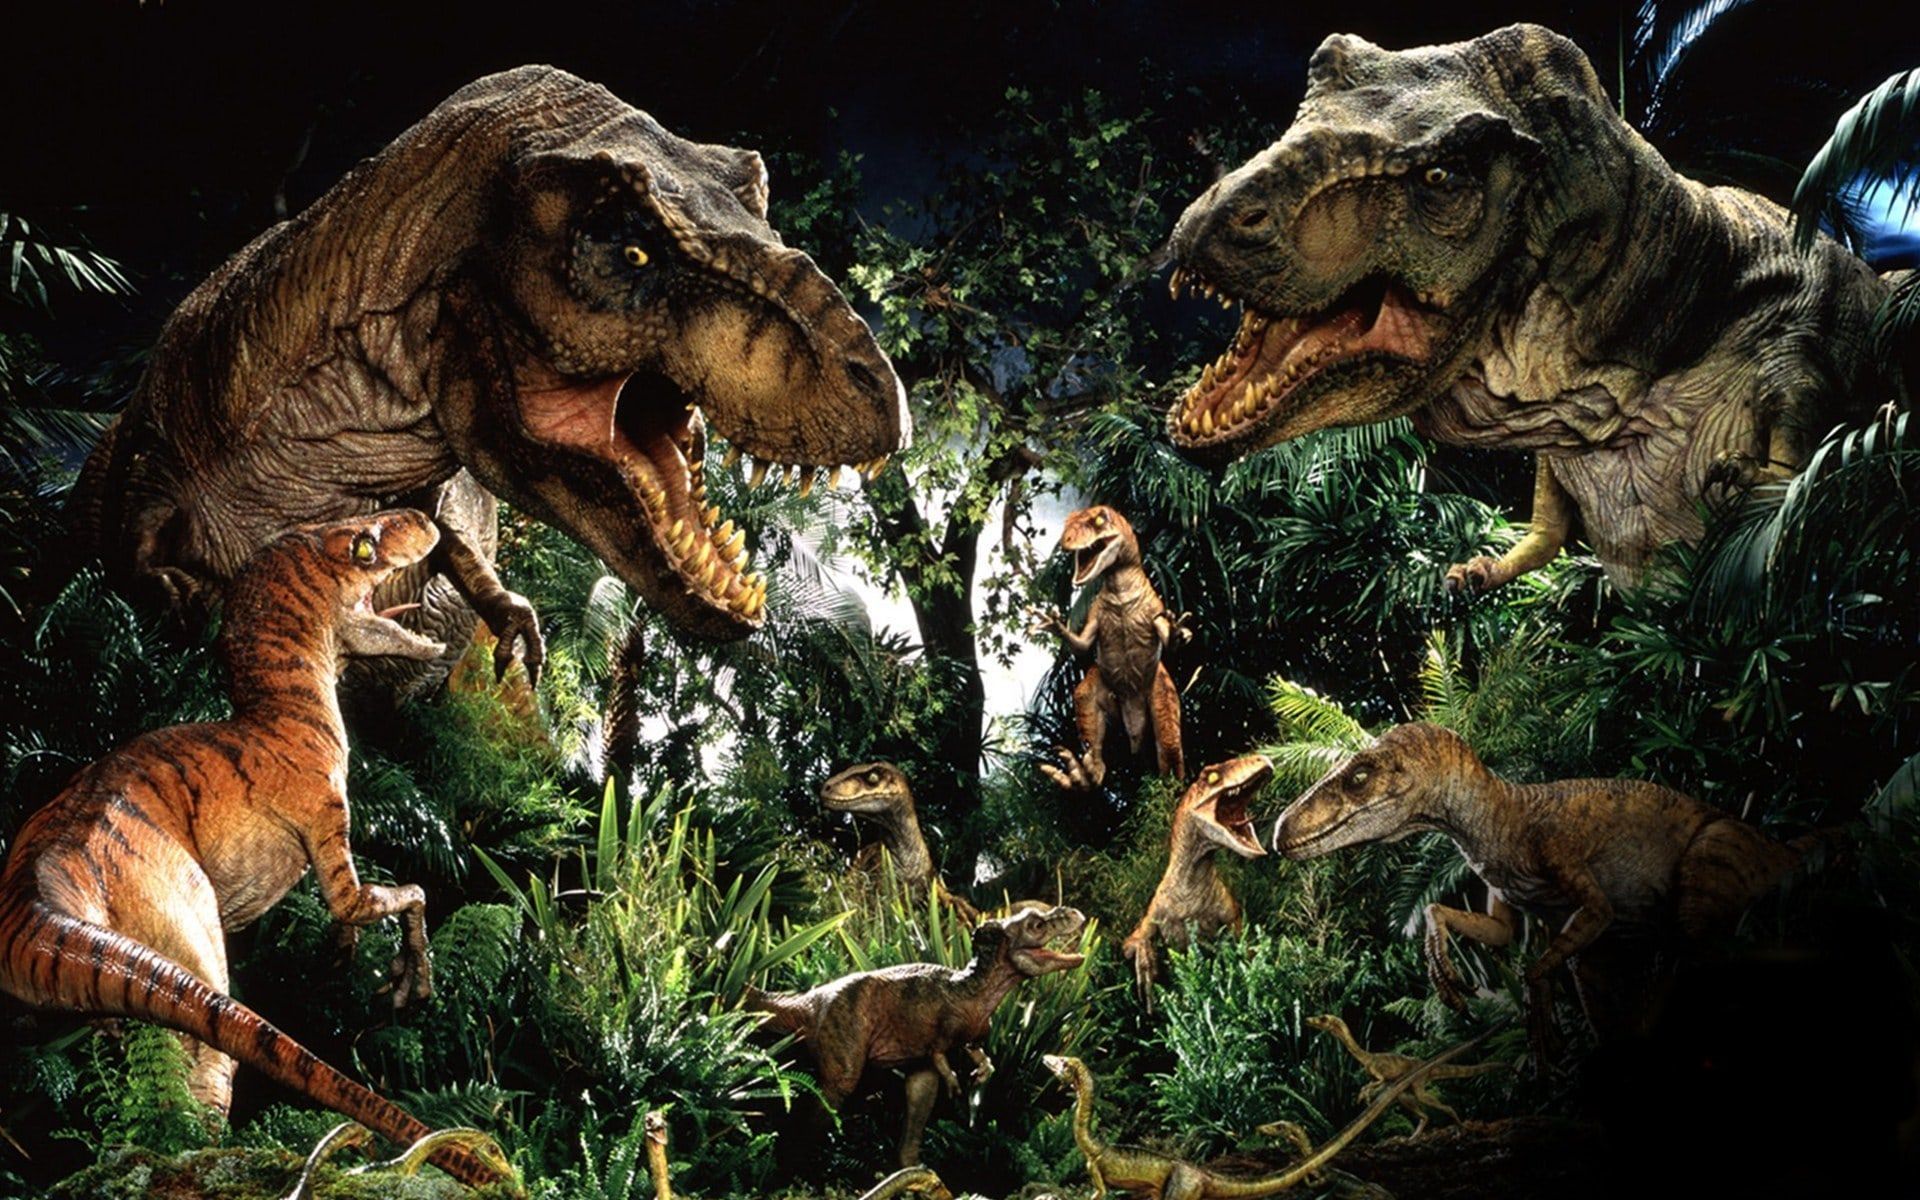 Jurassic World Evolution 2 Poster Wallpapers